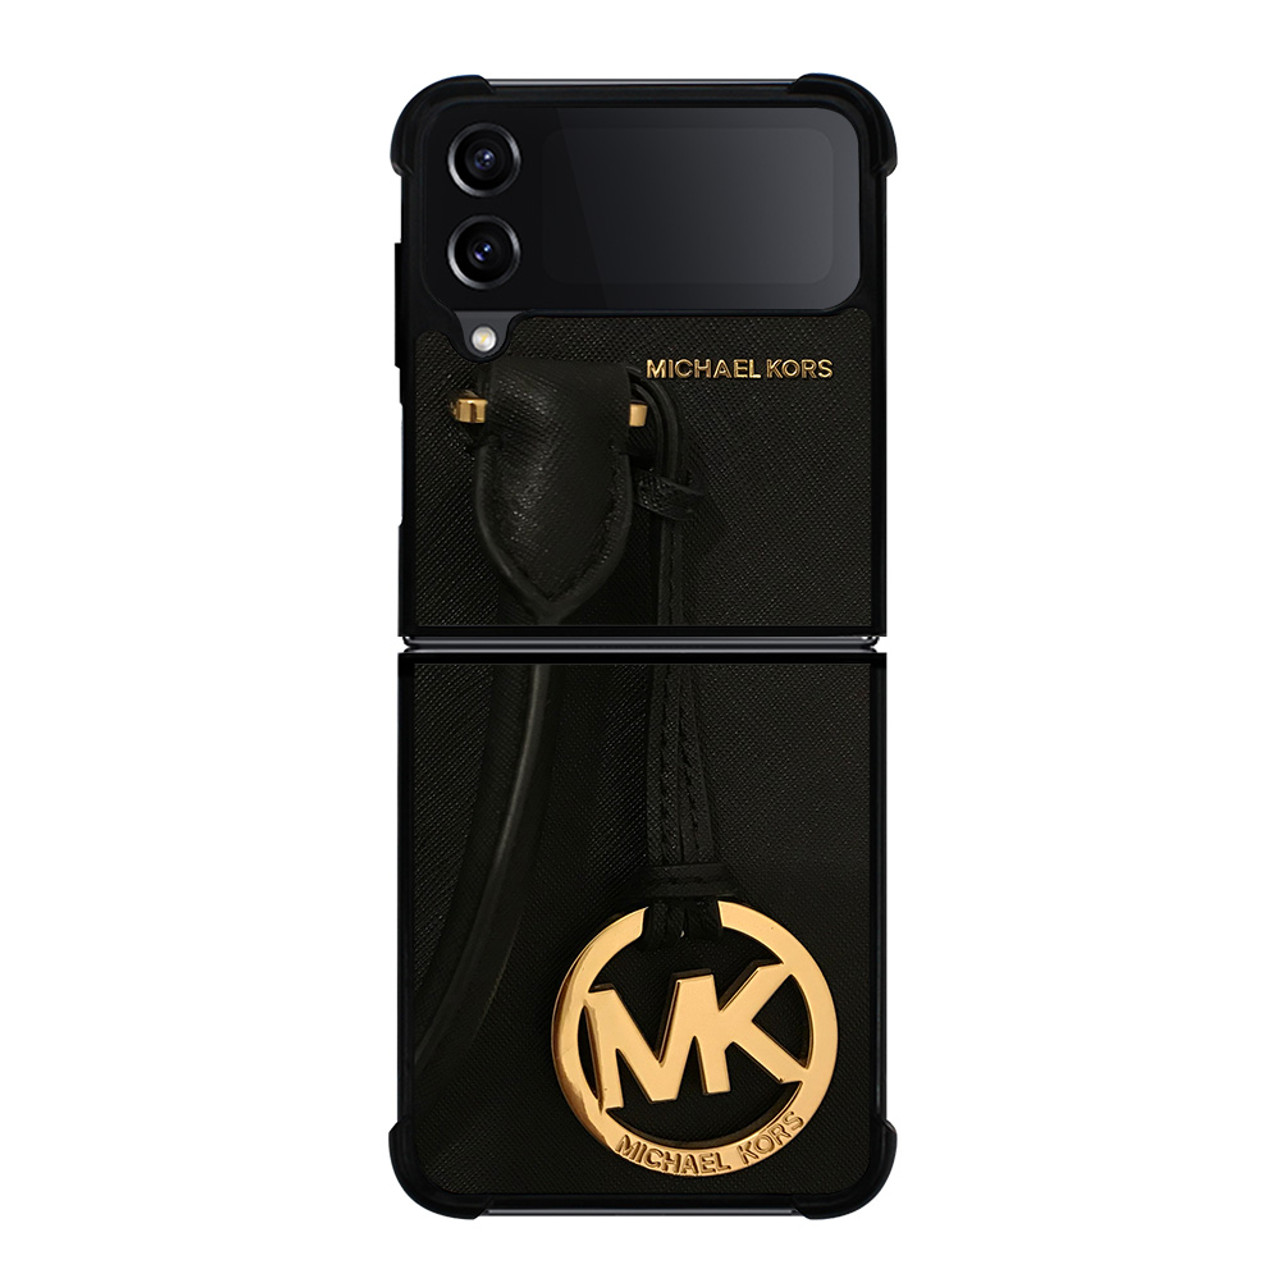 MICHAEL KORS LOGO BLACK Samsung Galaxy S20 Case Cover